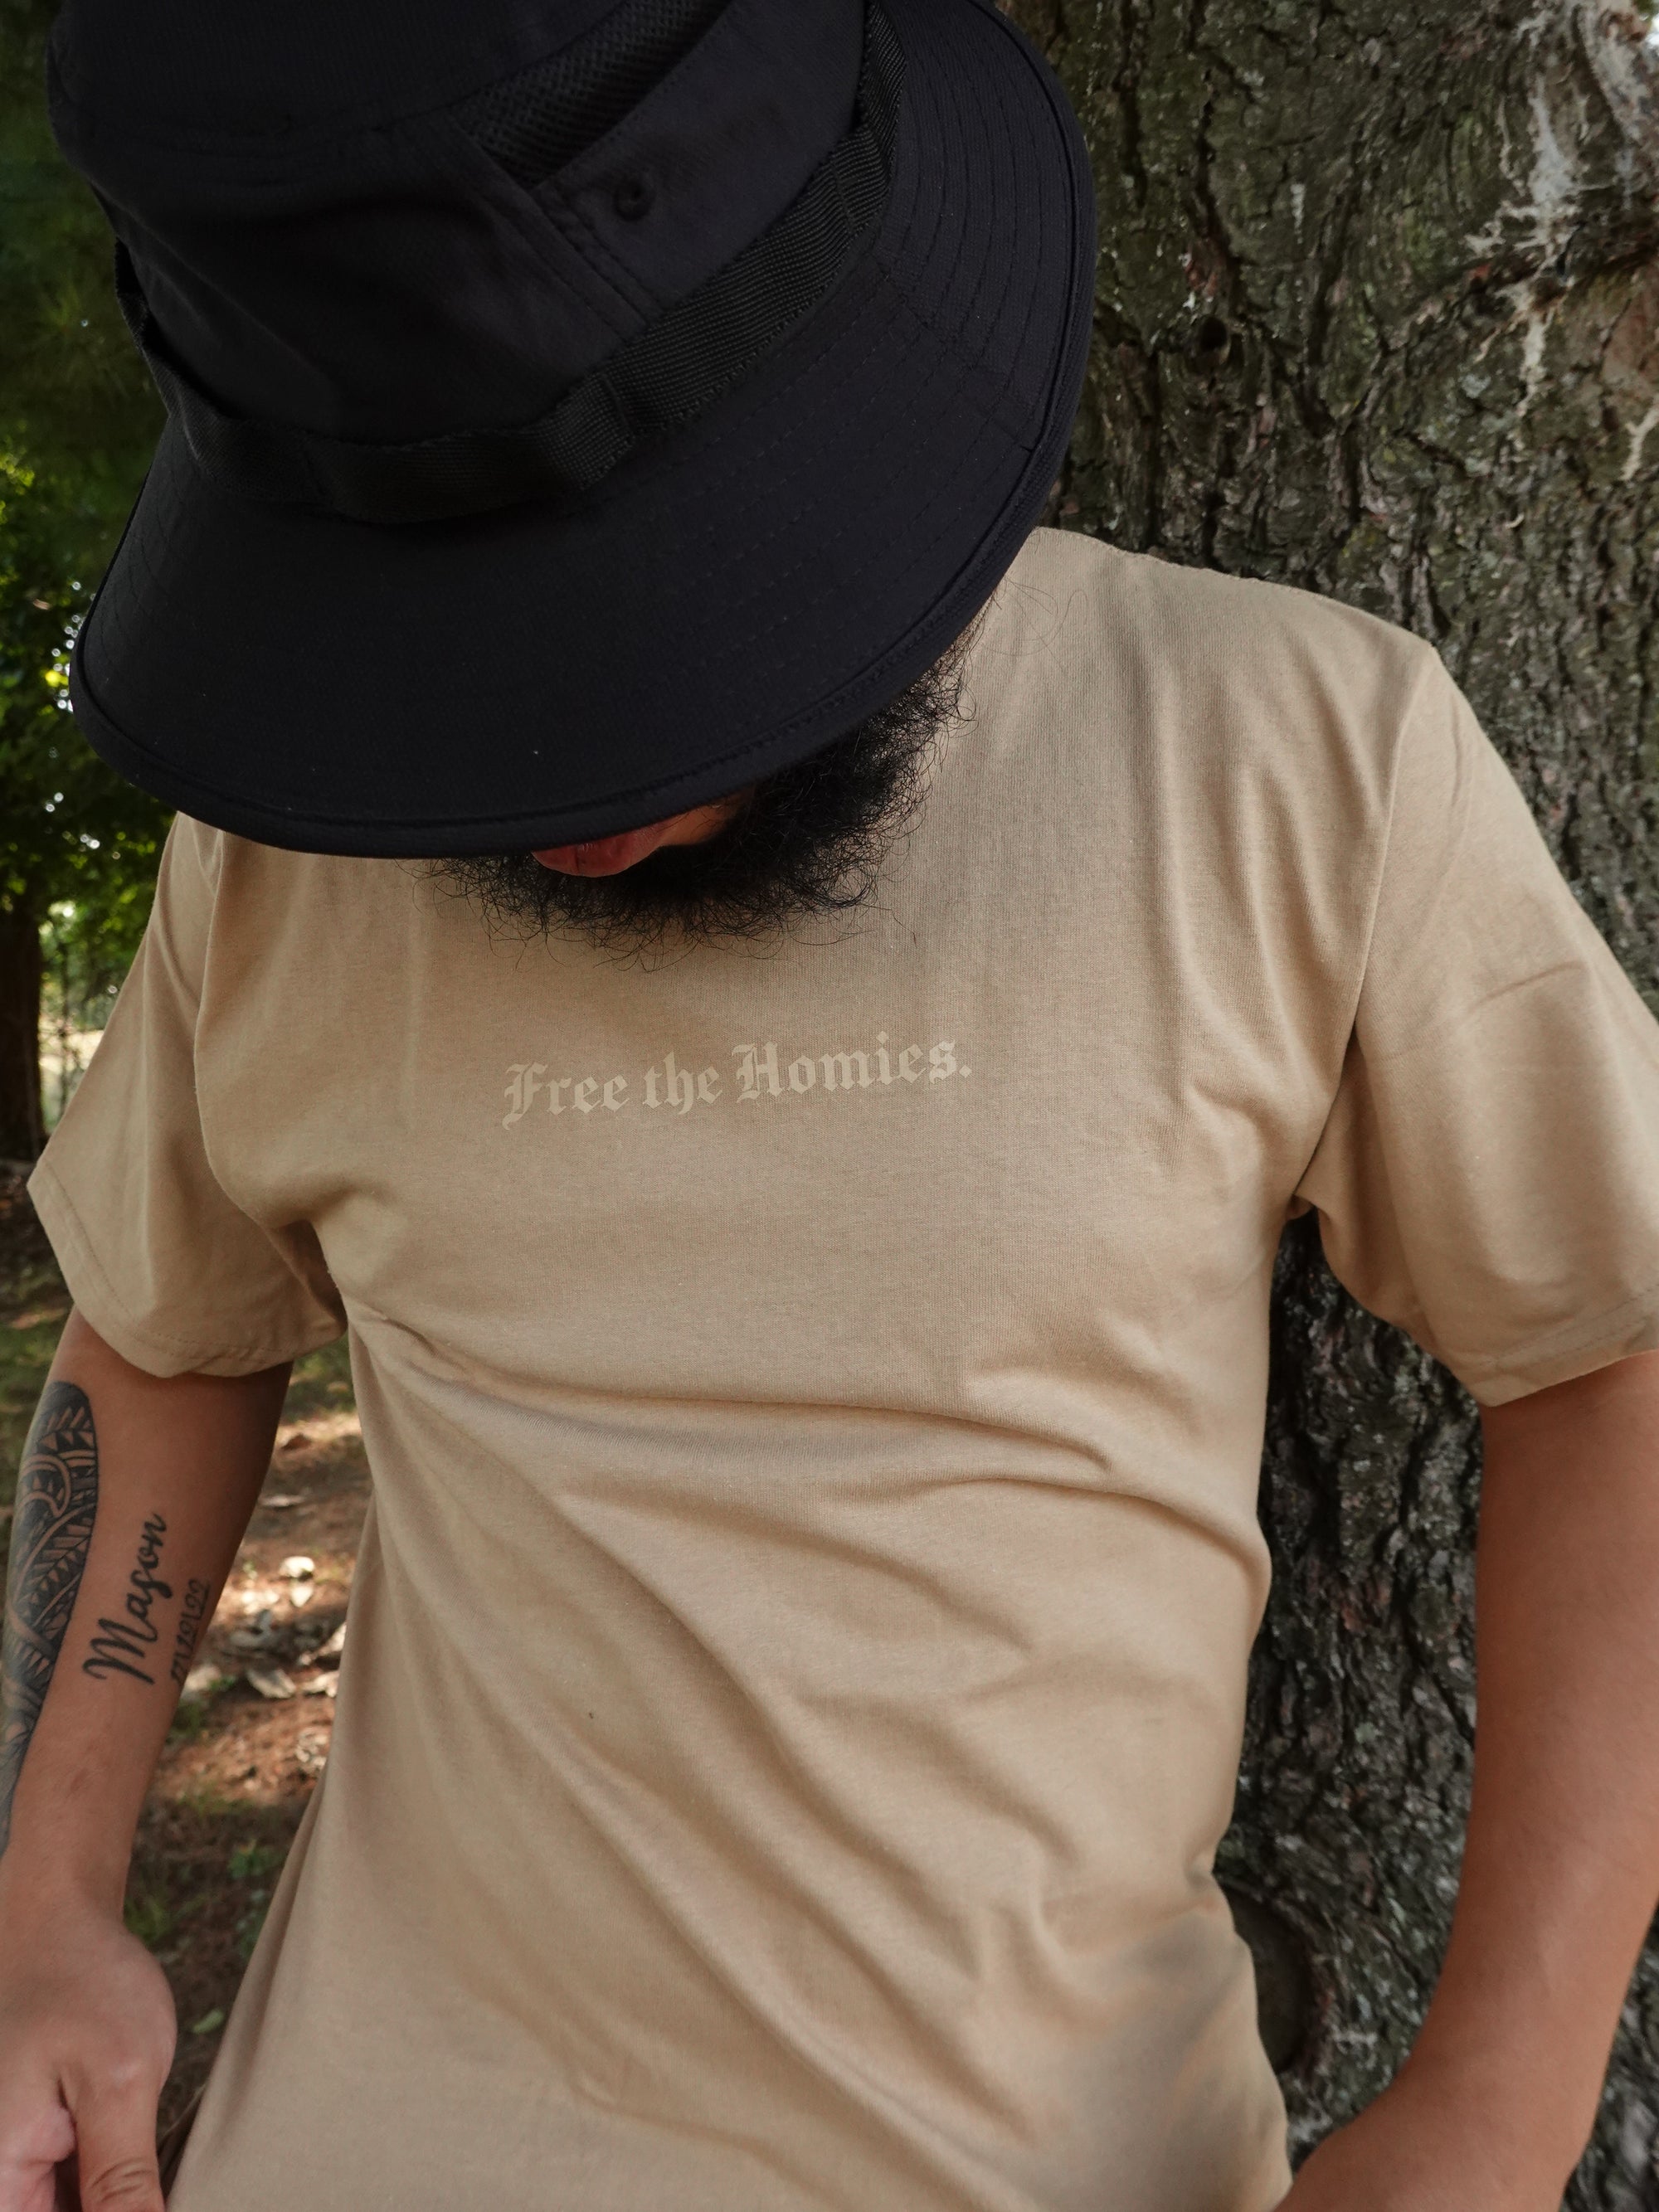 Free the Homies Shirt (Decarcerate Refresh)